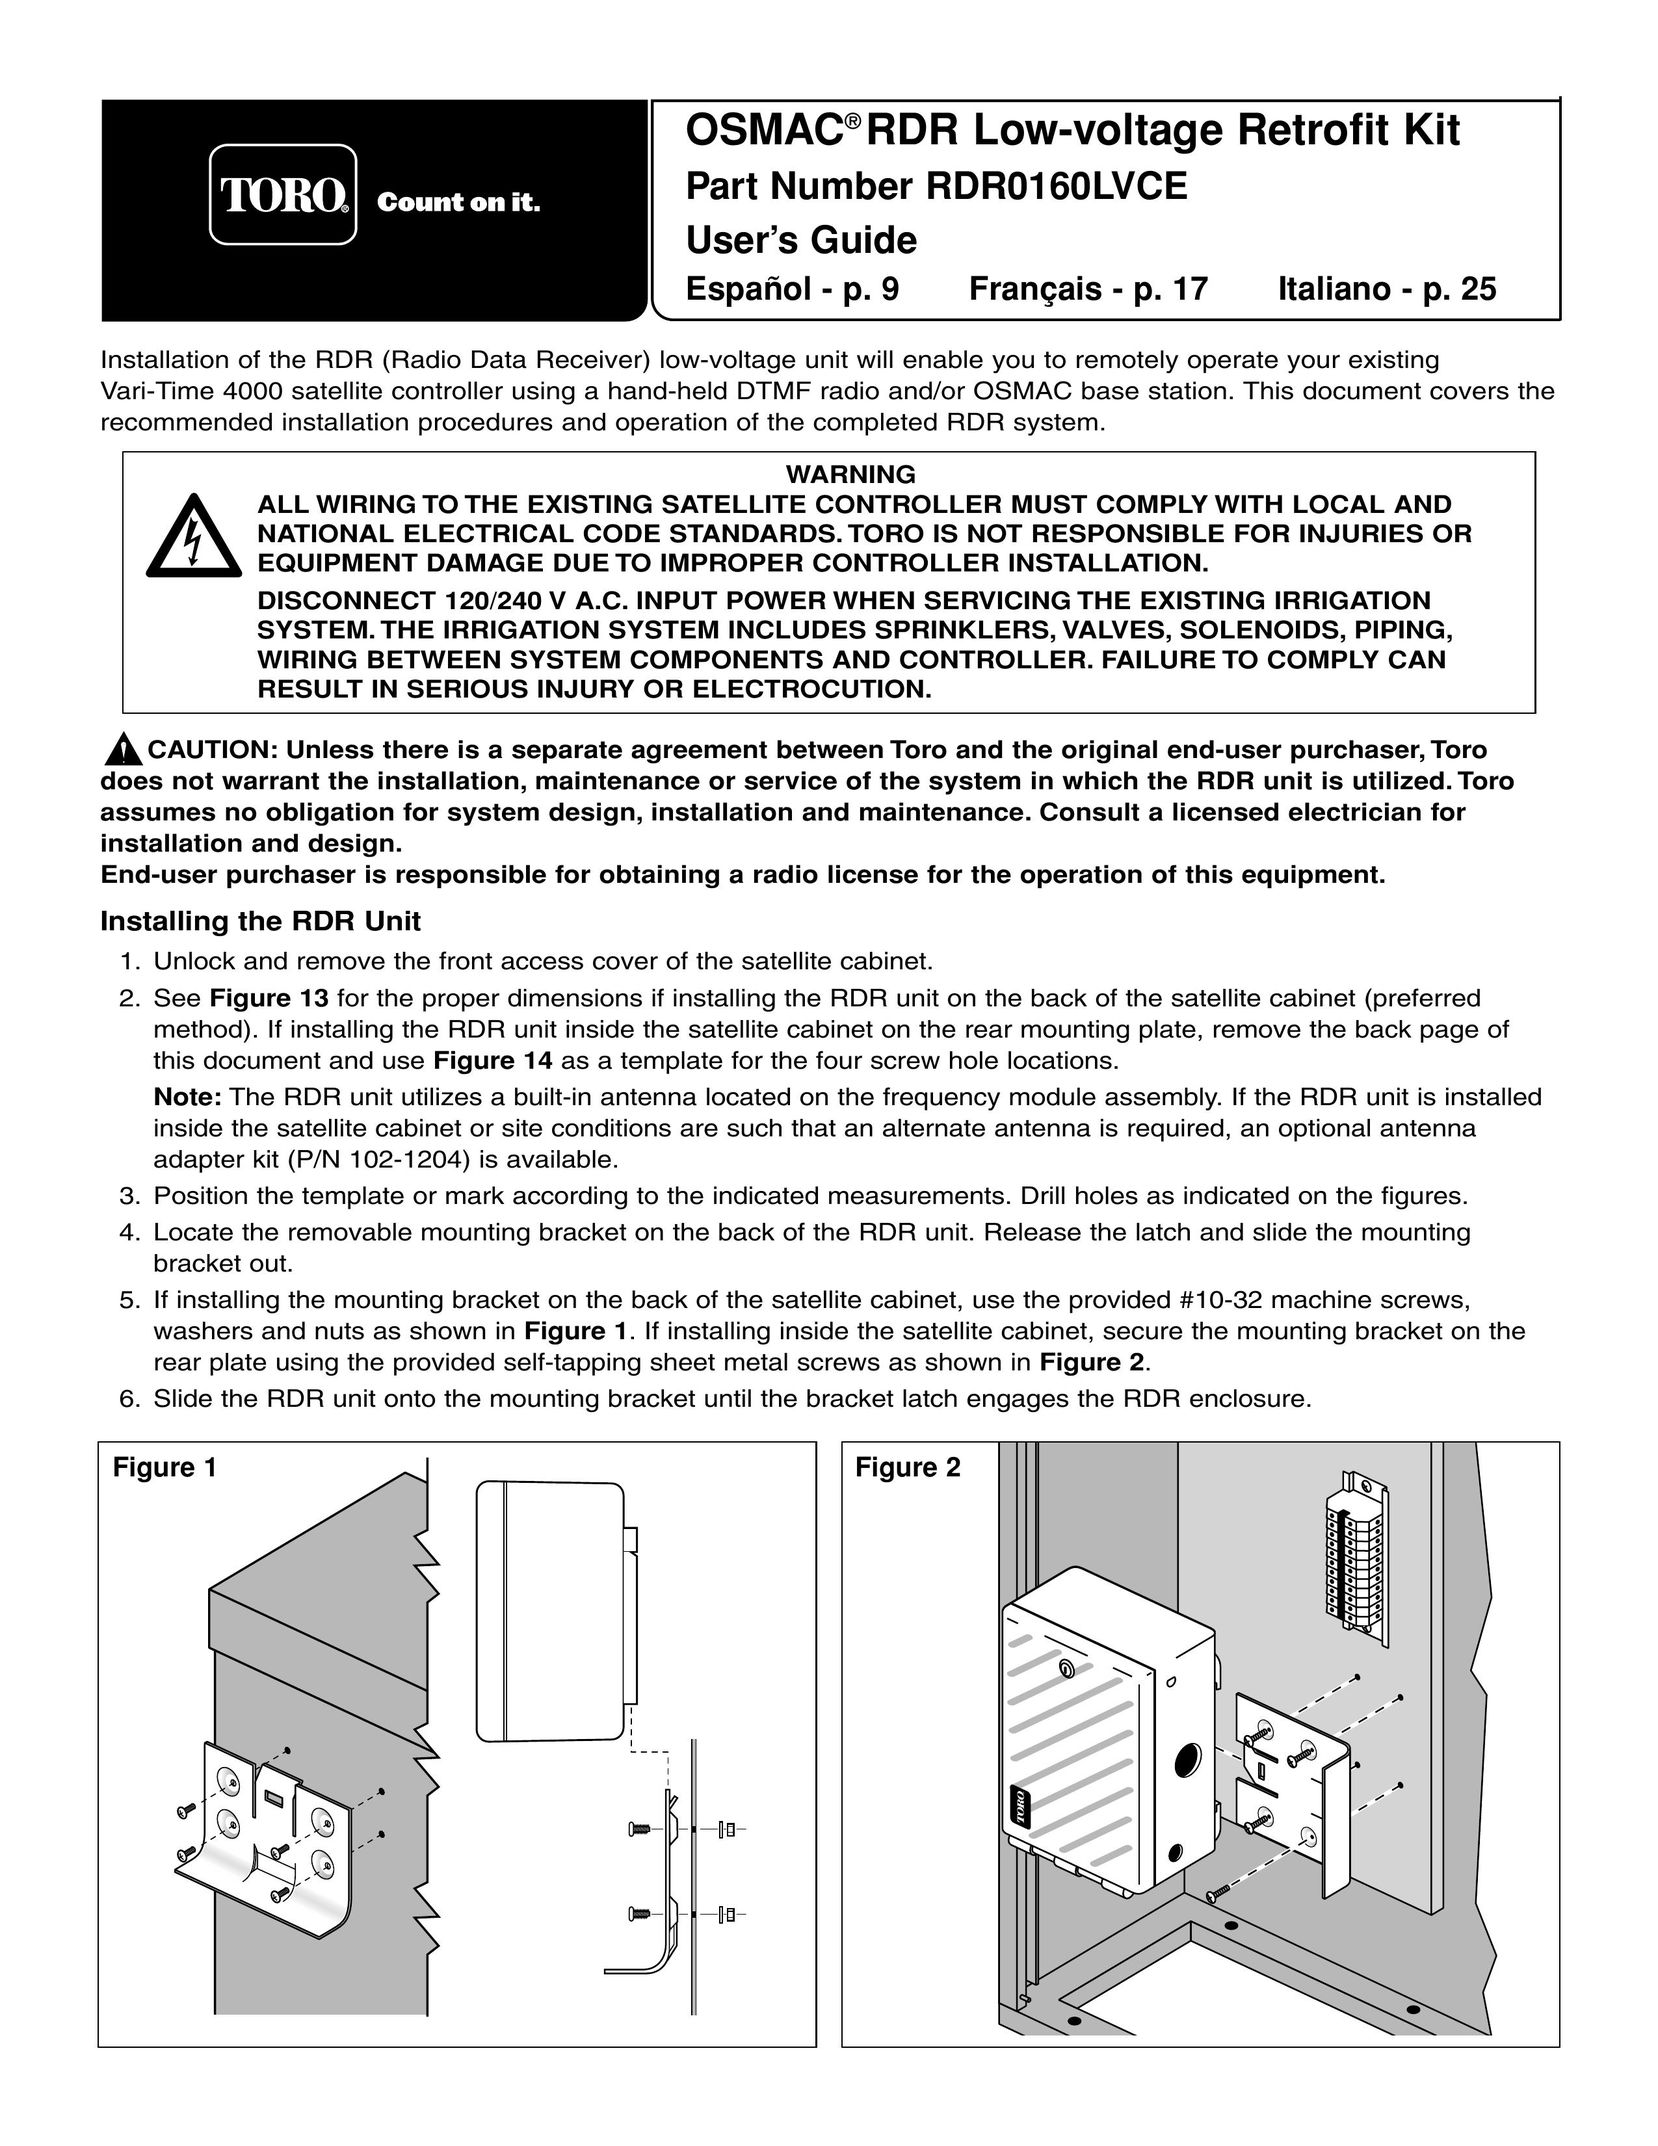 Toro RDR0160LVCE Car Satellite TV System User Manual